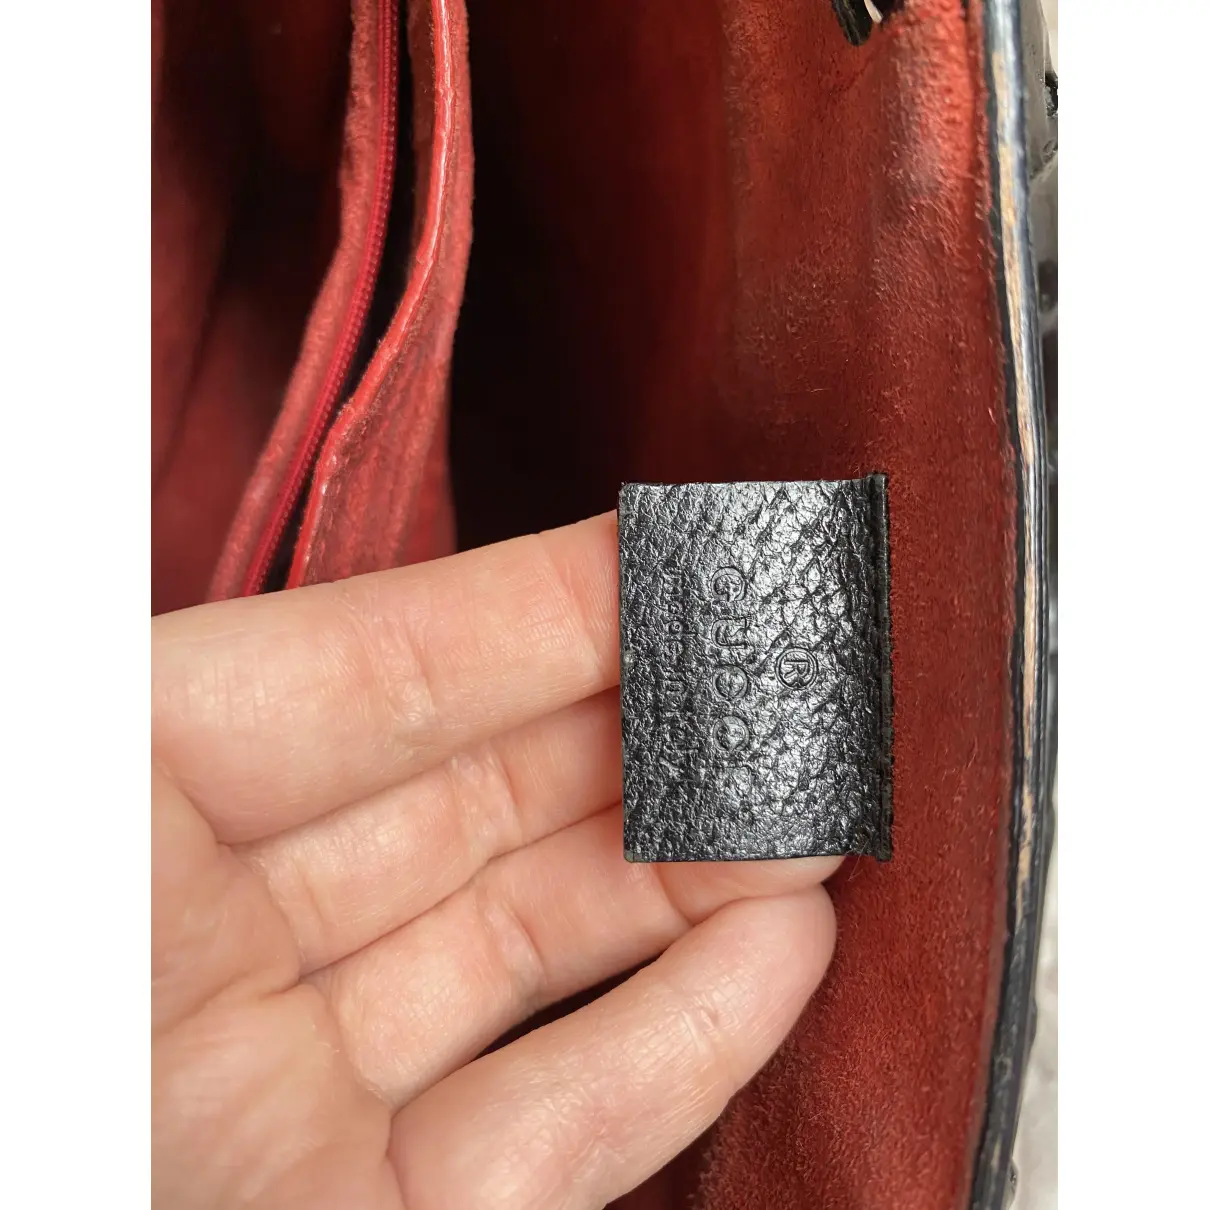 Buy Gucci Bamboo leather handbag online